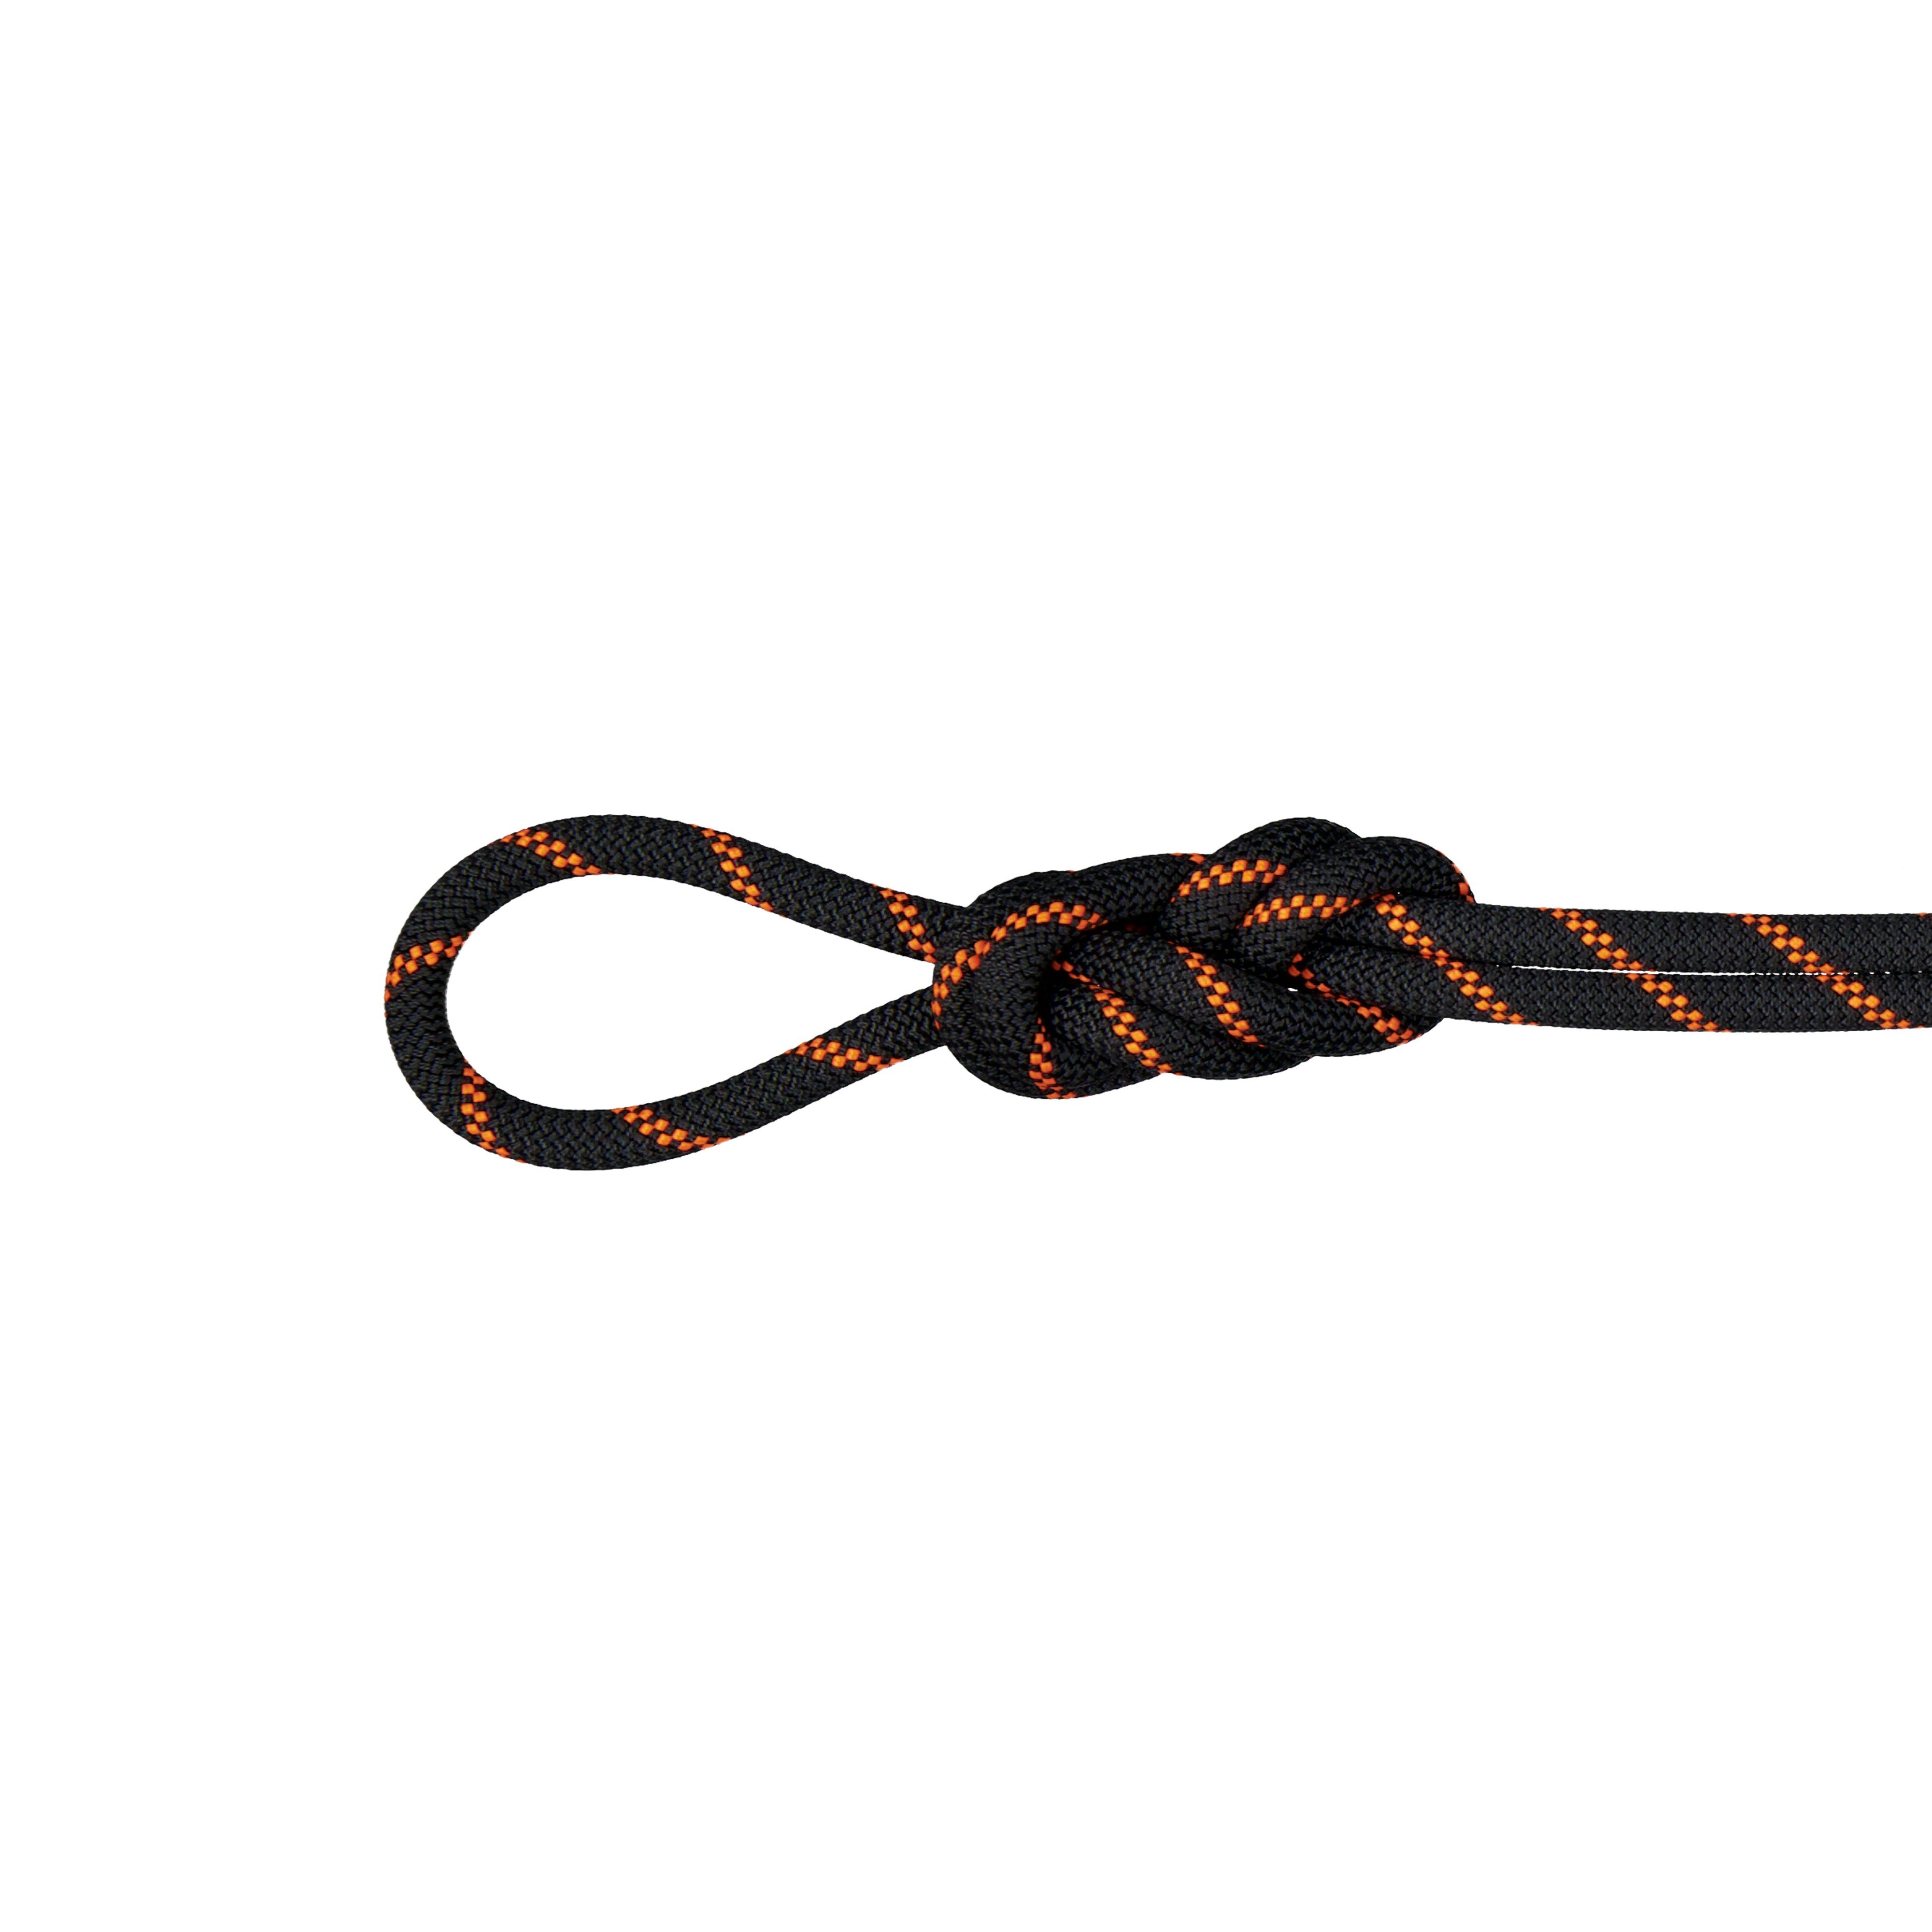 8.7 Alpine Sender Dry Rope - Dry Standard, black-safety orange, 30 m thumbnail